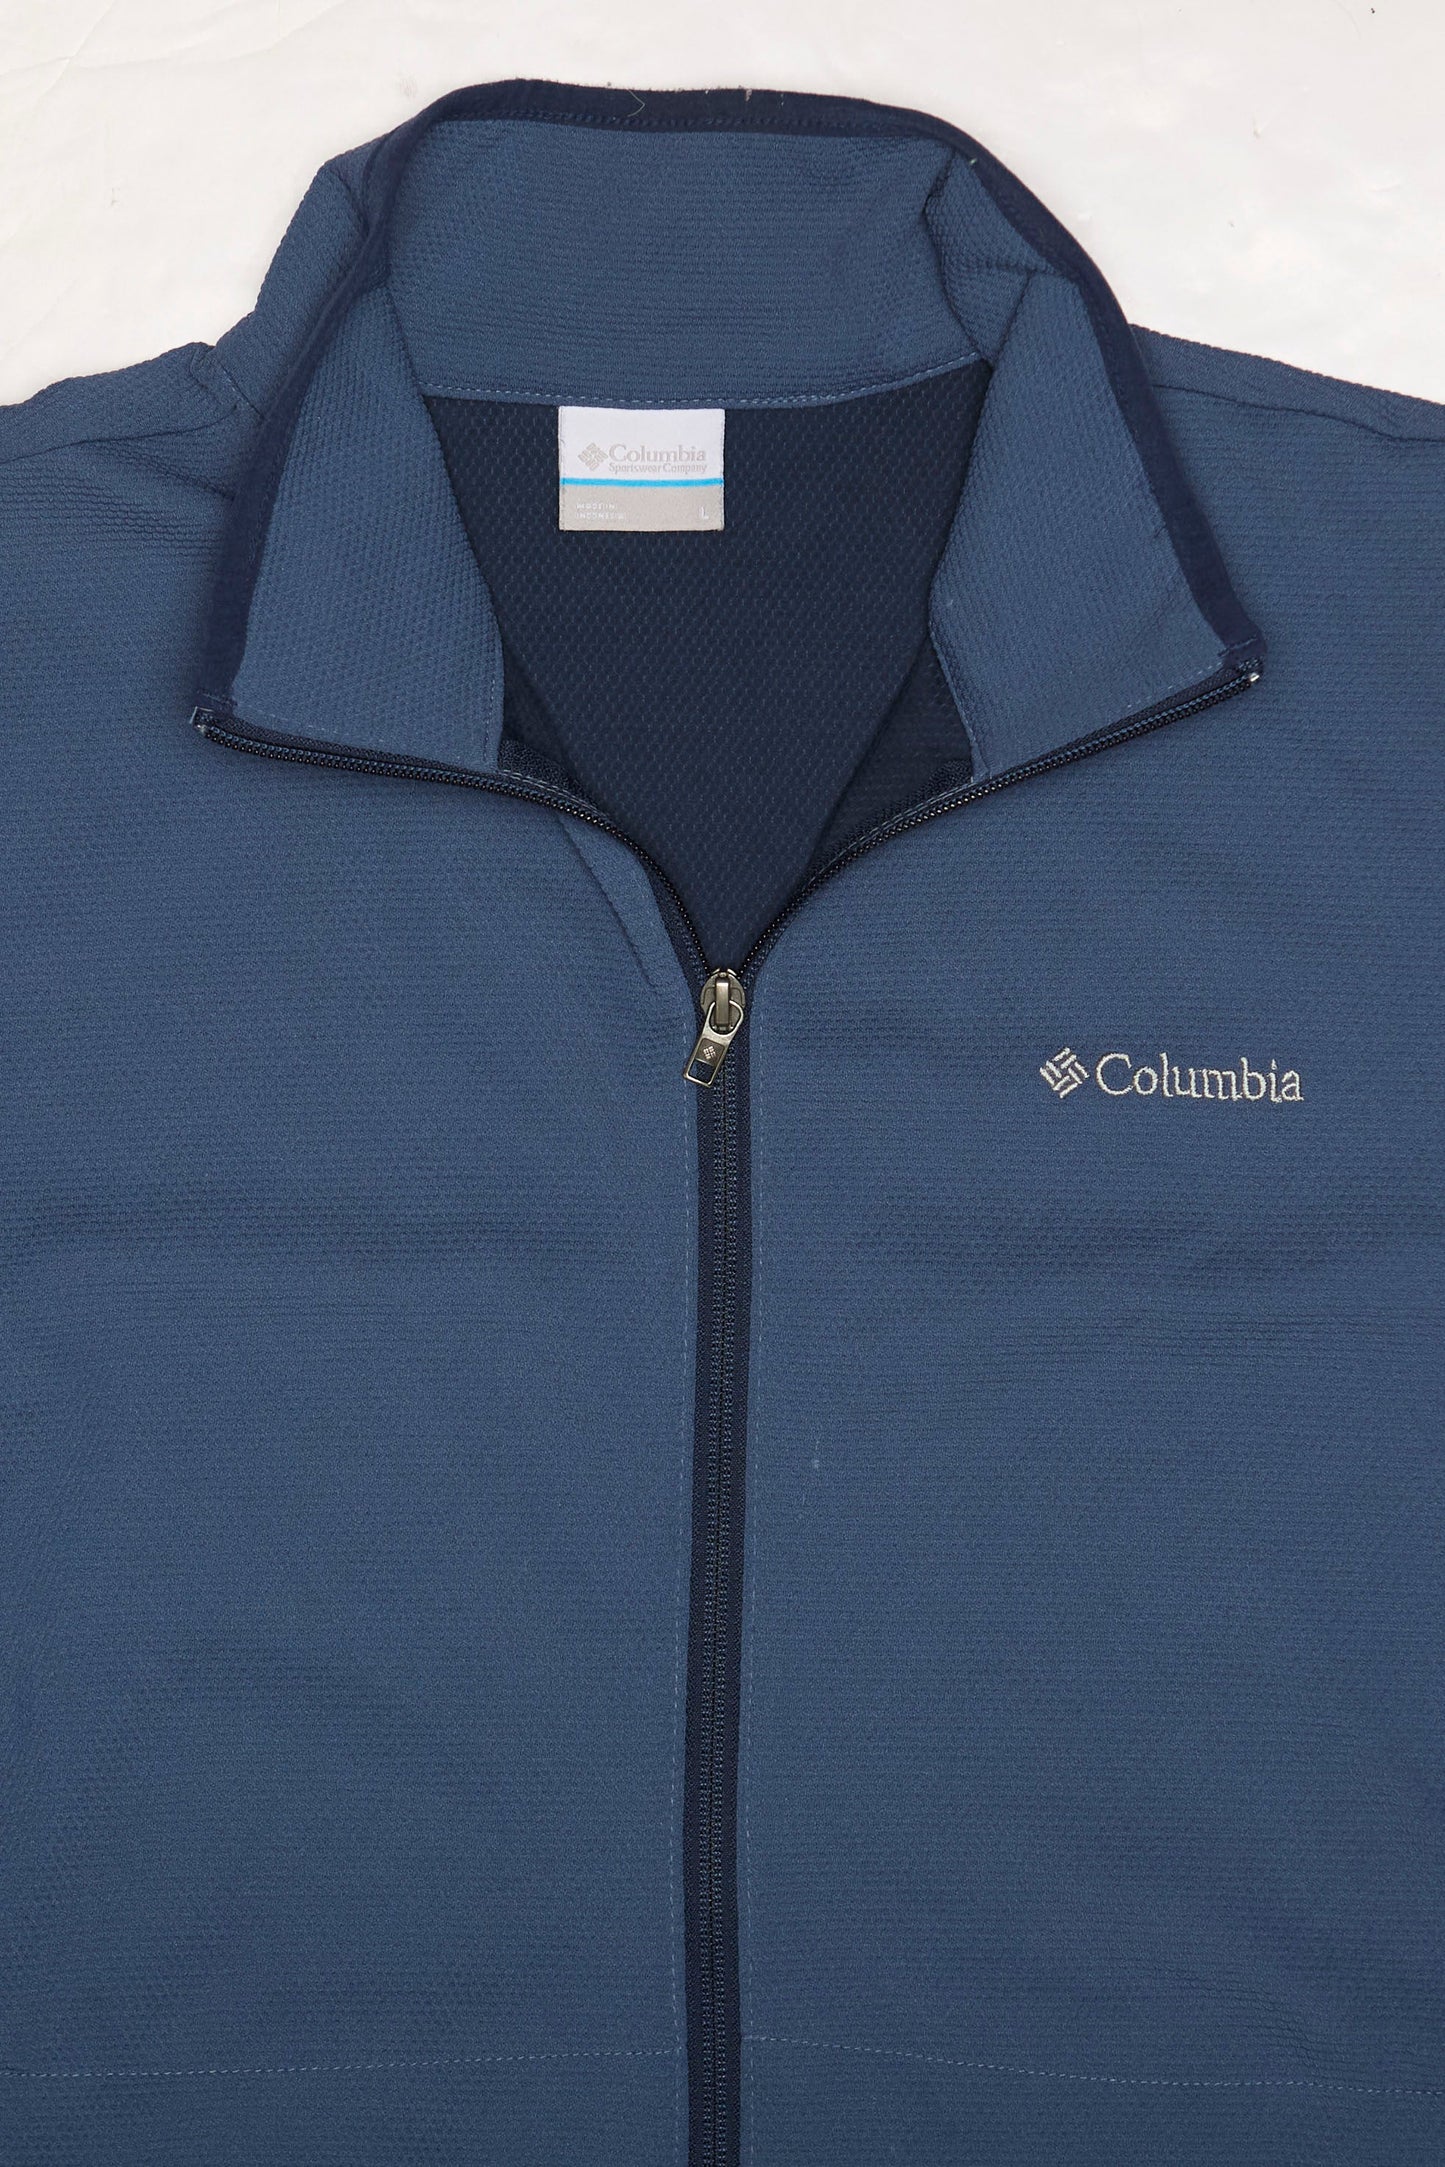 Columbia Soft Shell Jacket - L